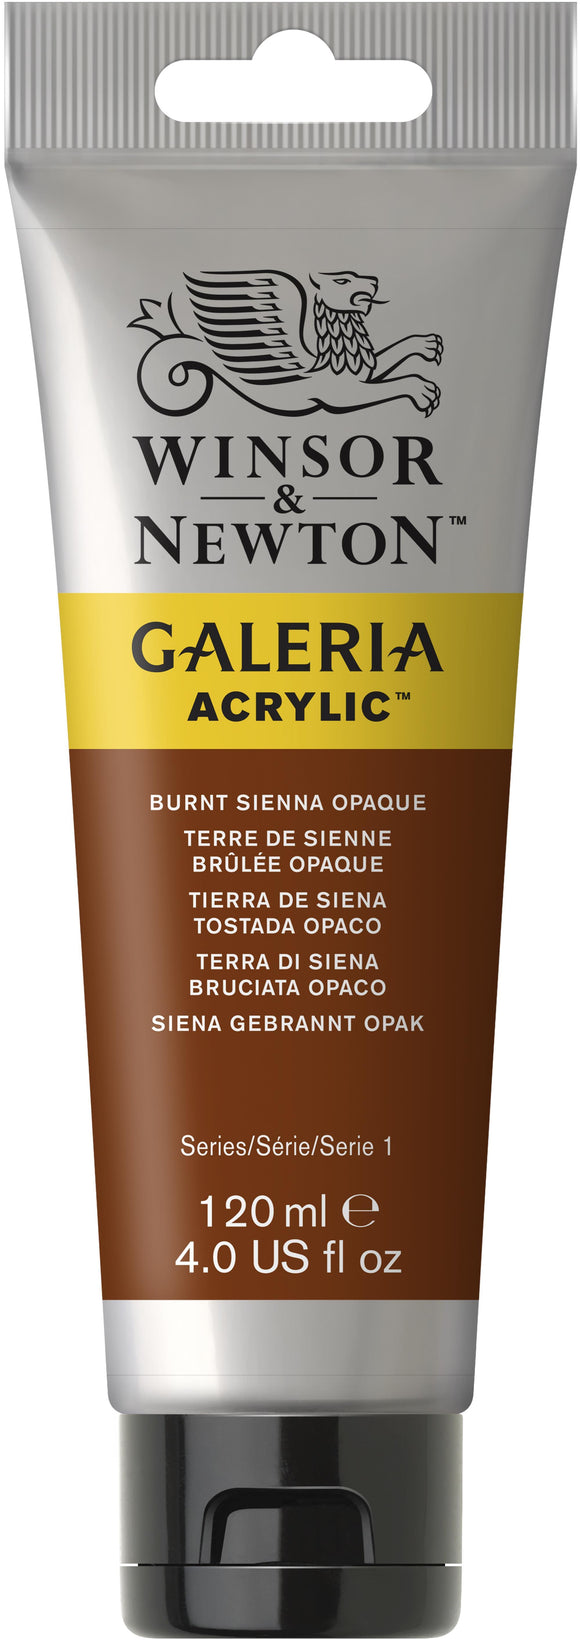 Winsor & Newton Galeria Acrylic Burnt Sienna Opaque 120Ml